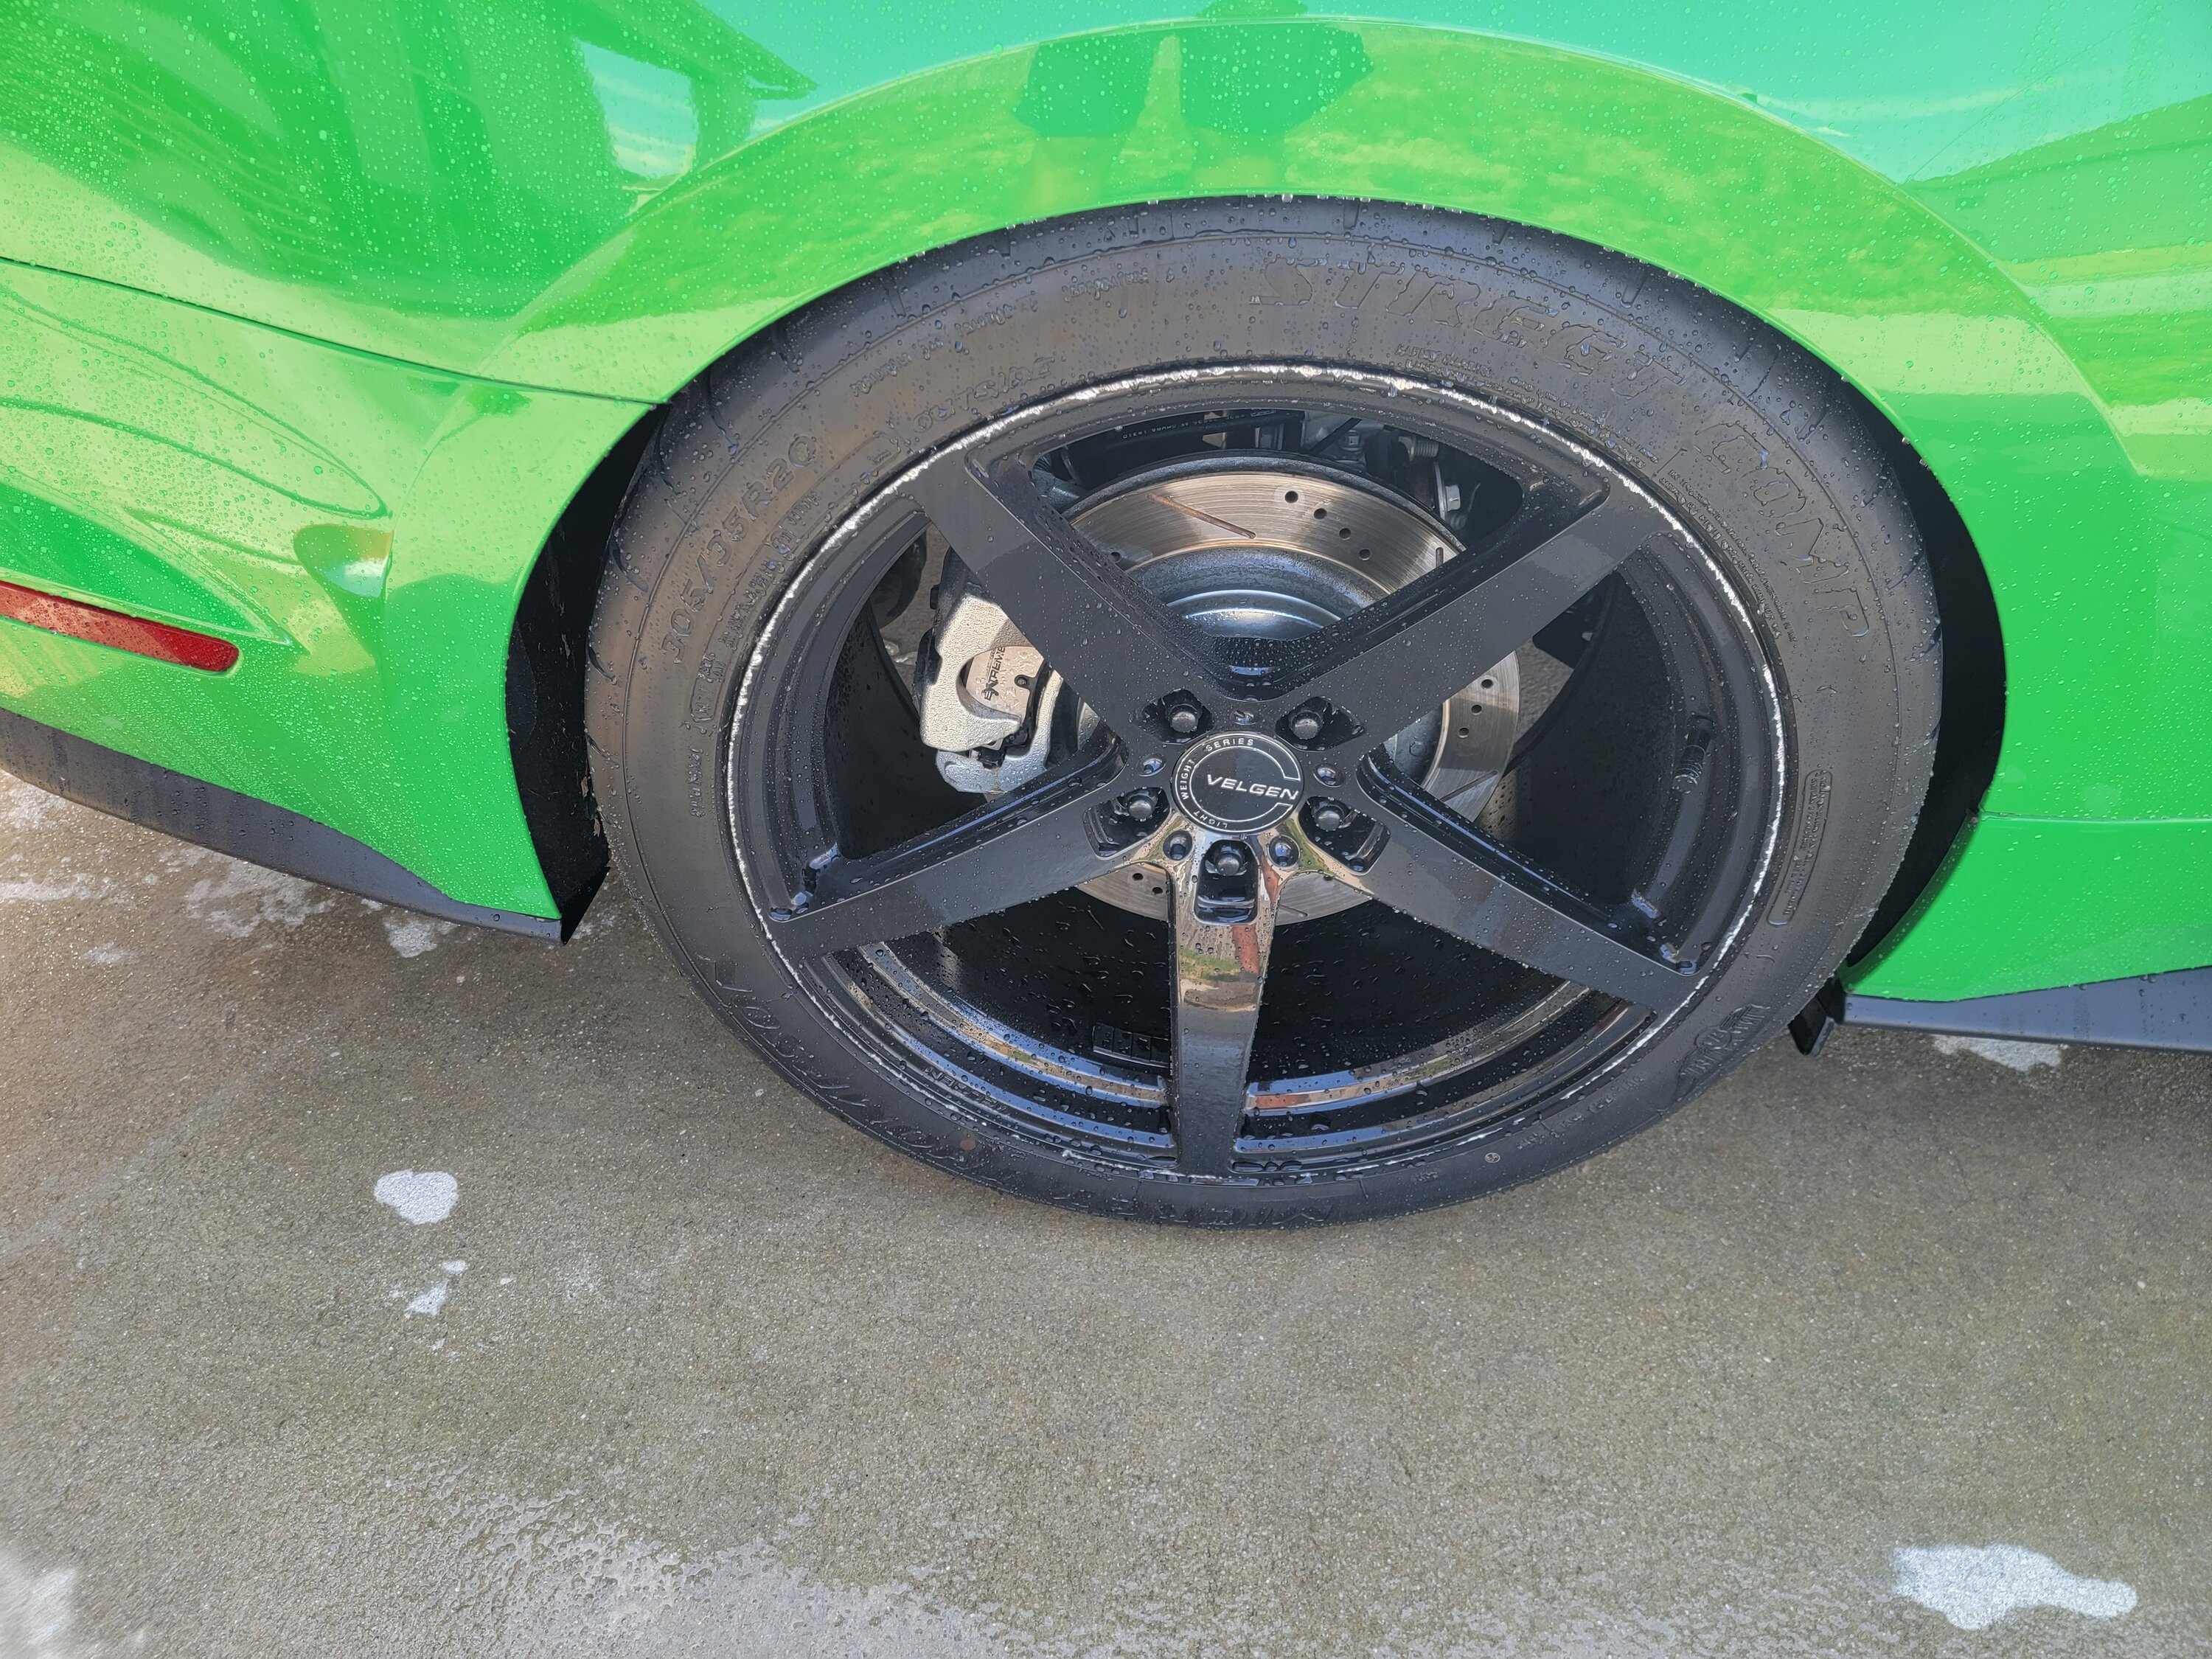 Damaged Rear Wheel.jpg